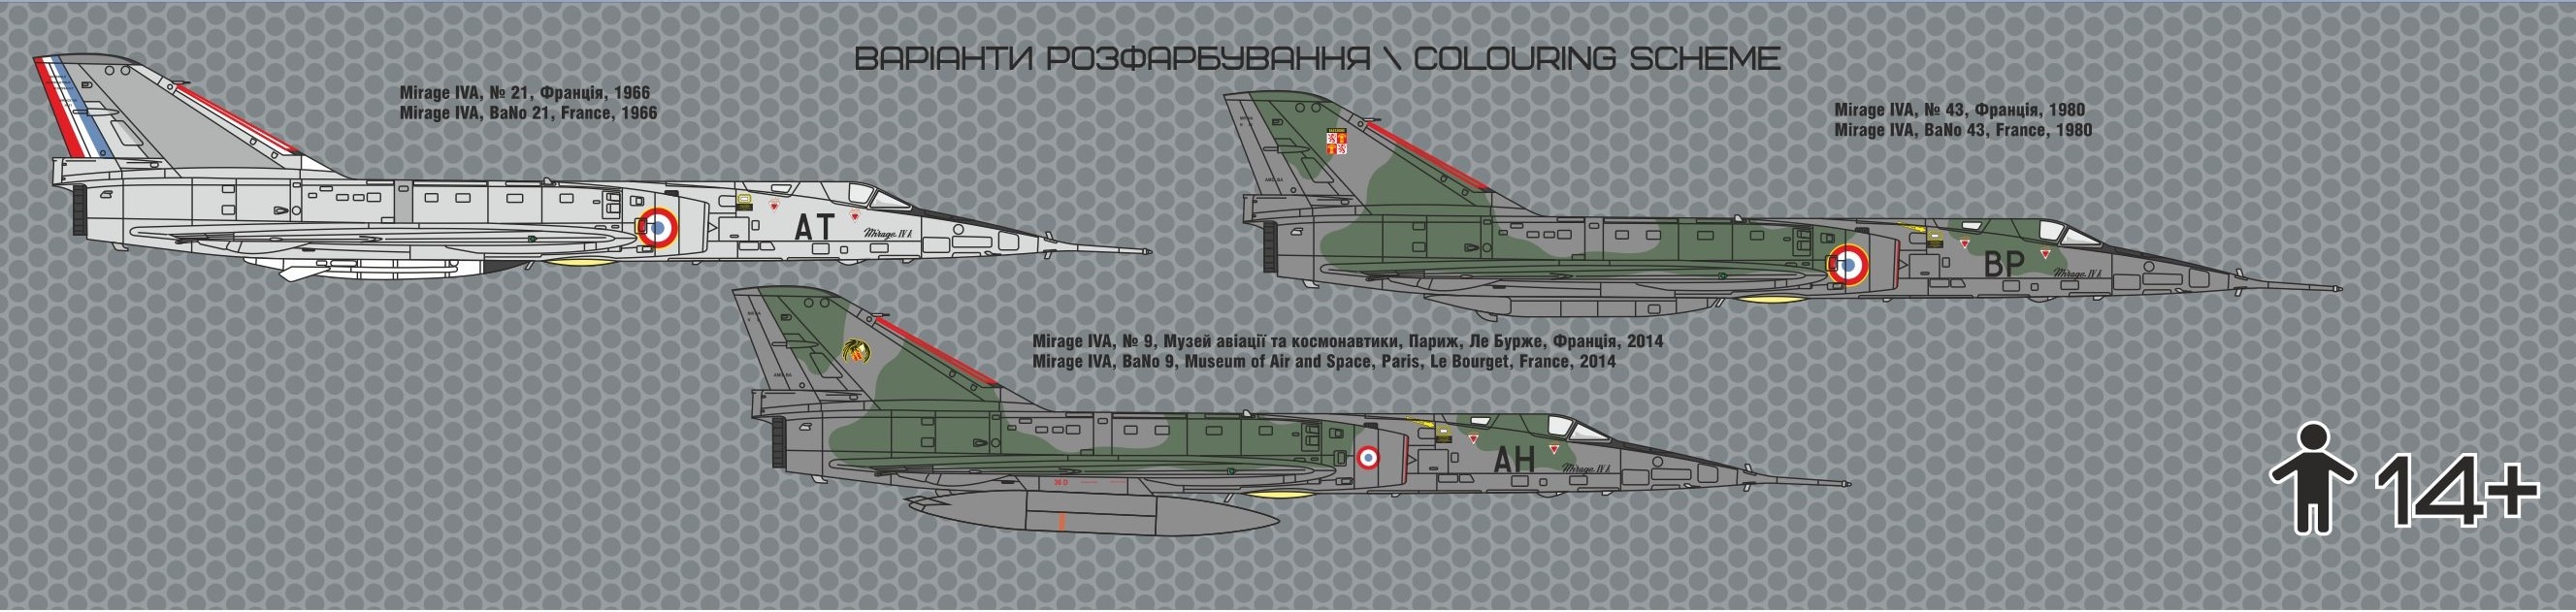 GAMD Mirage IV ミラージュIVジェット爆撃機 超音速戦略爆撃機 - 洋書